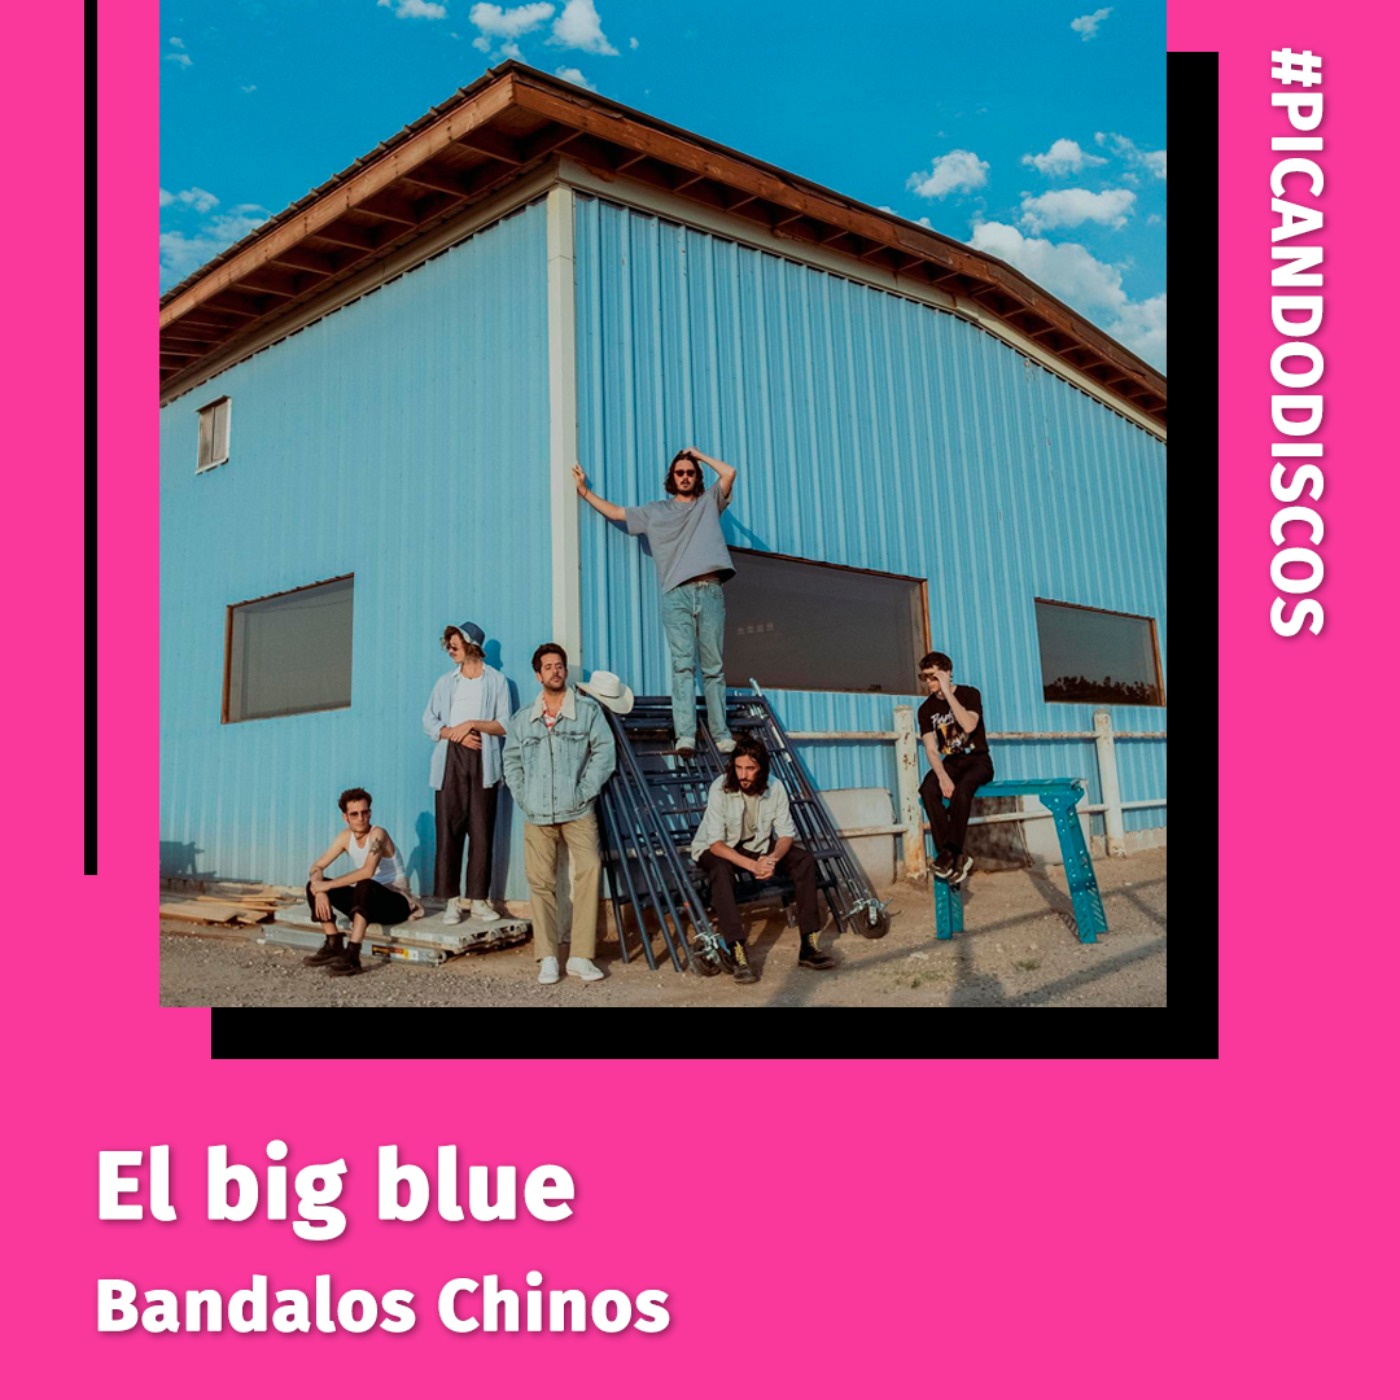 cover art for "El big blue", Bandalos Chinos